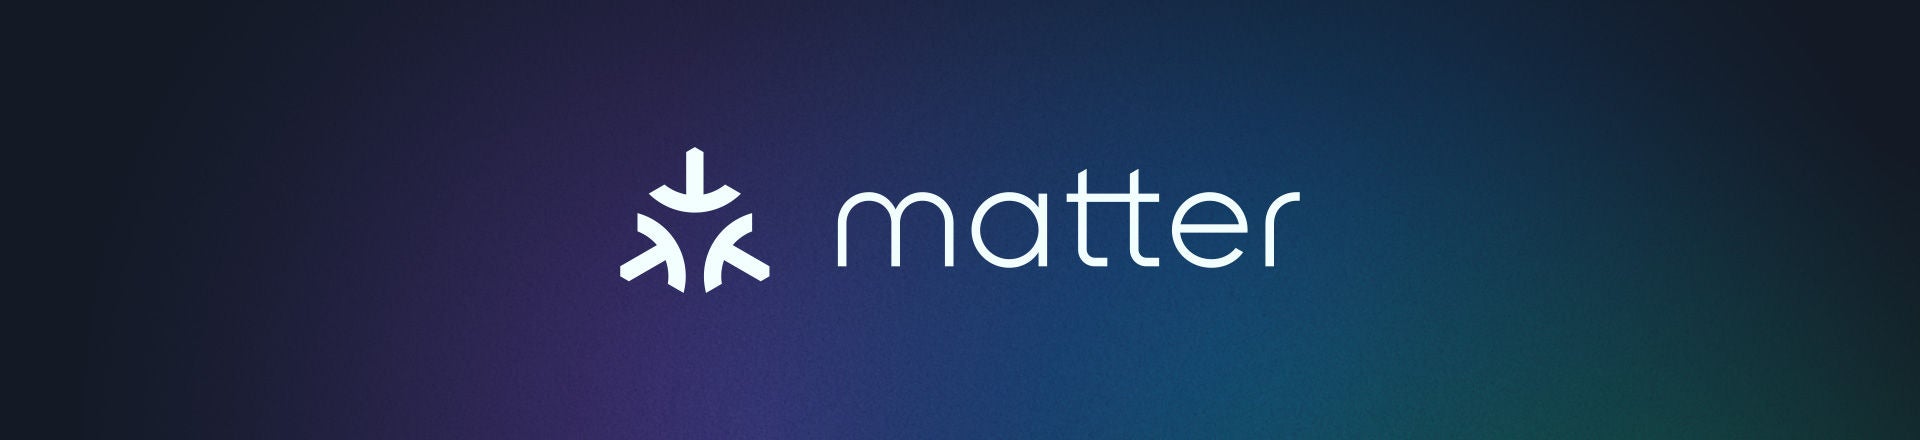 Matter banner image